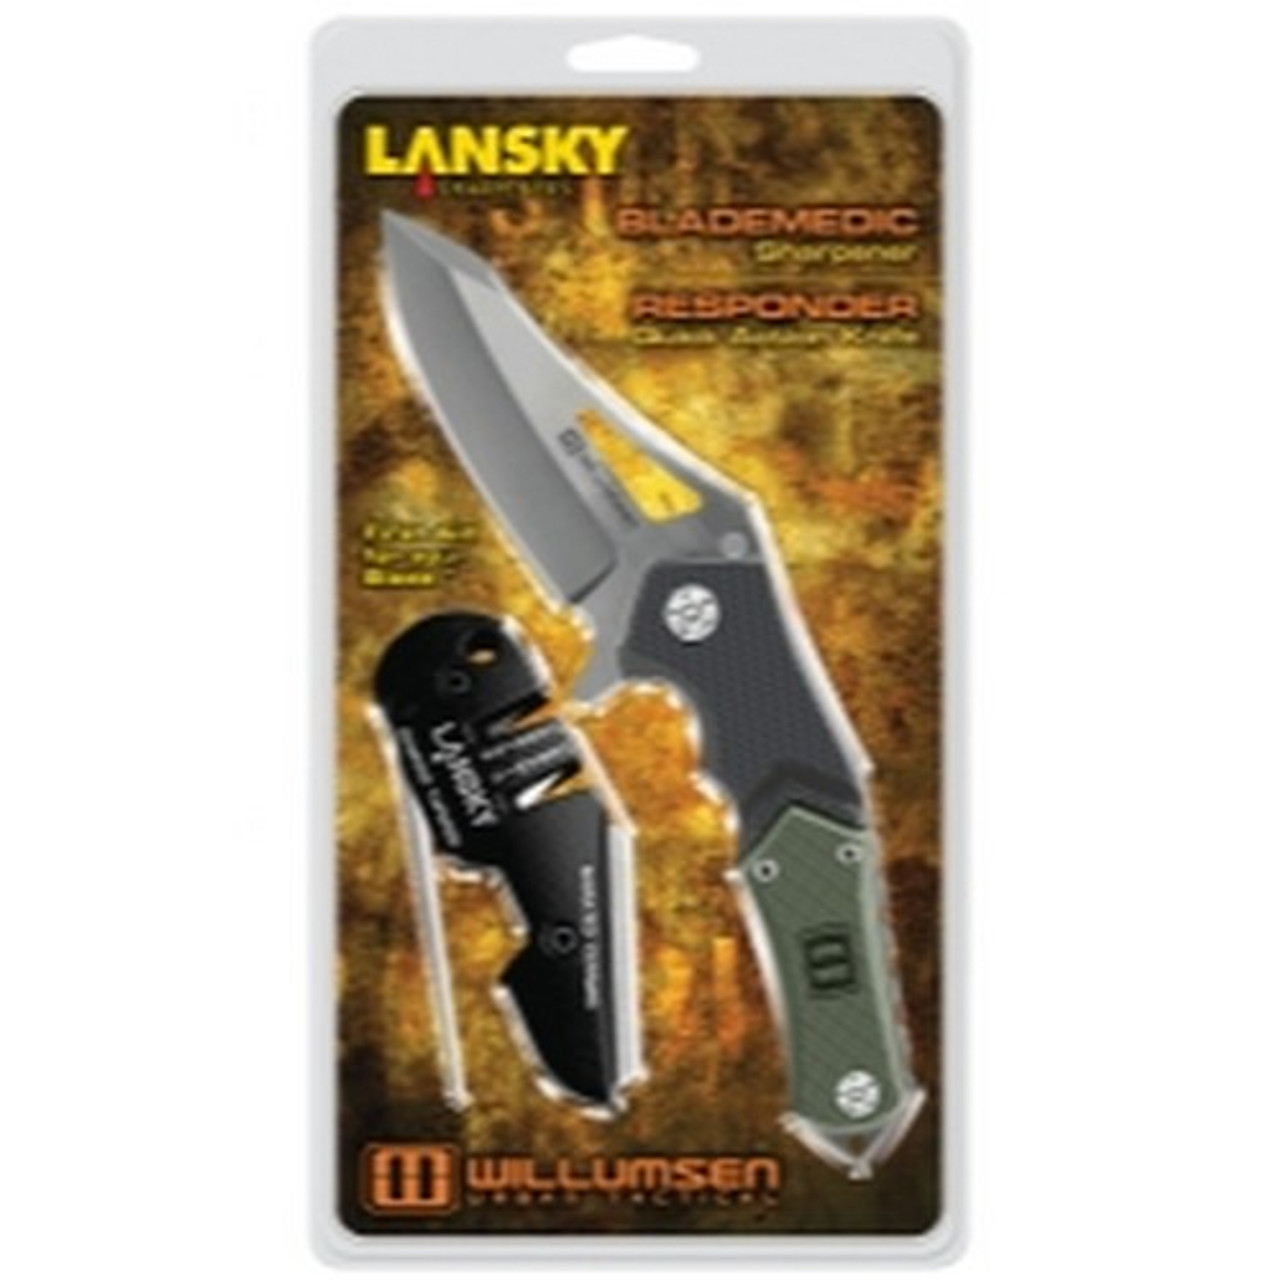 Lansky Sharpeners UTR7 MIKKEL WILLUMSEN'S Urban Tactical, 7" Responder Folding Knife & Sharpener Combo | JB Tools